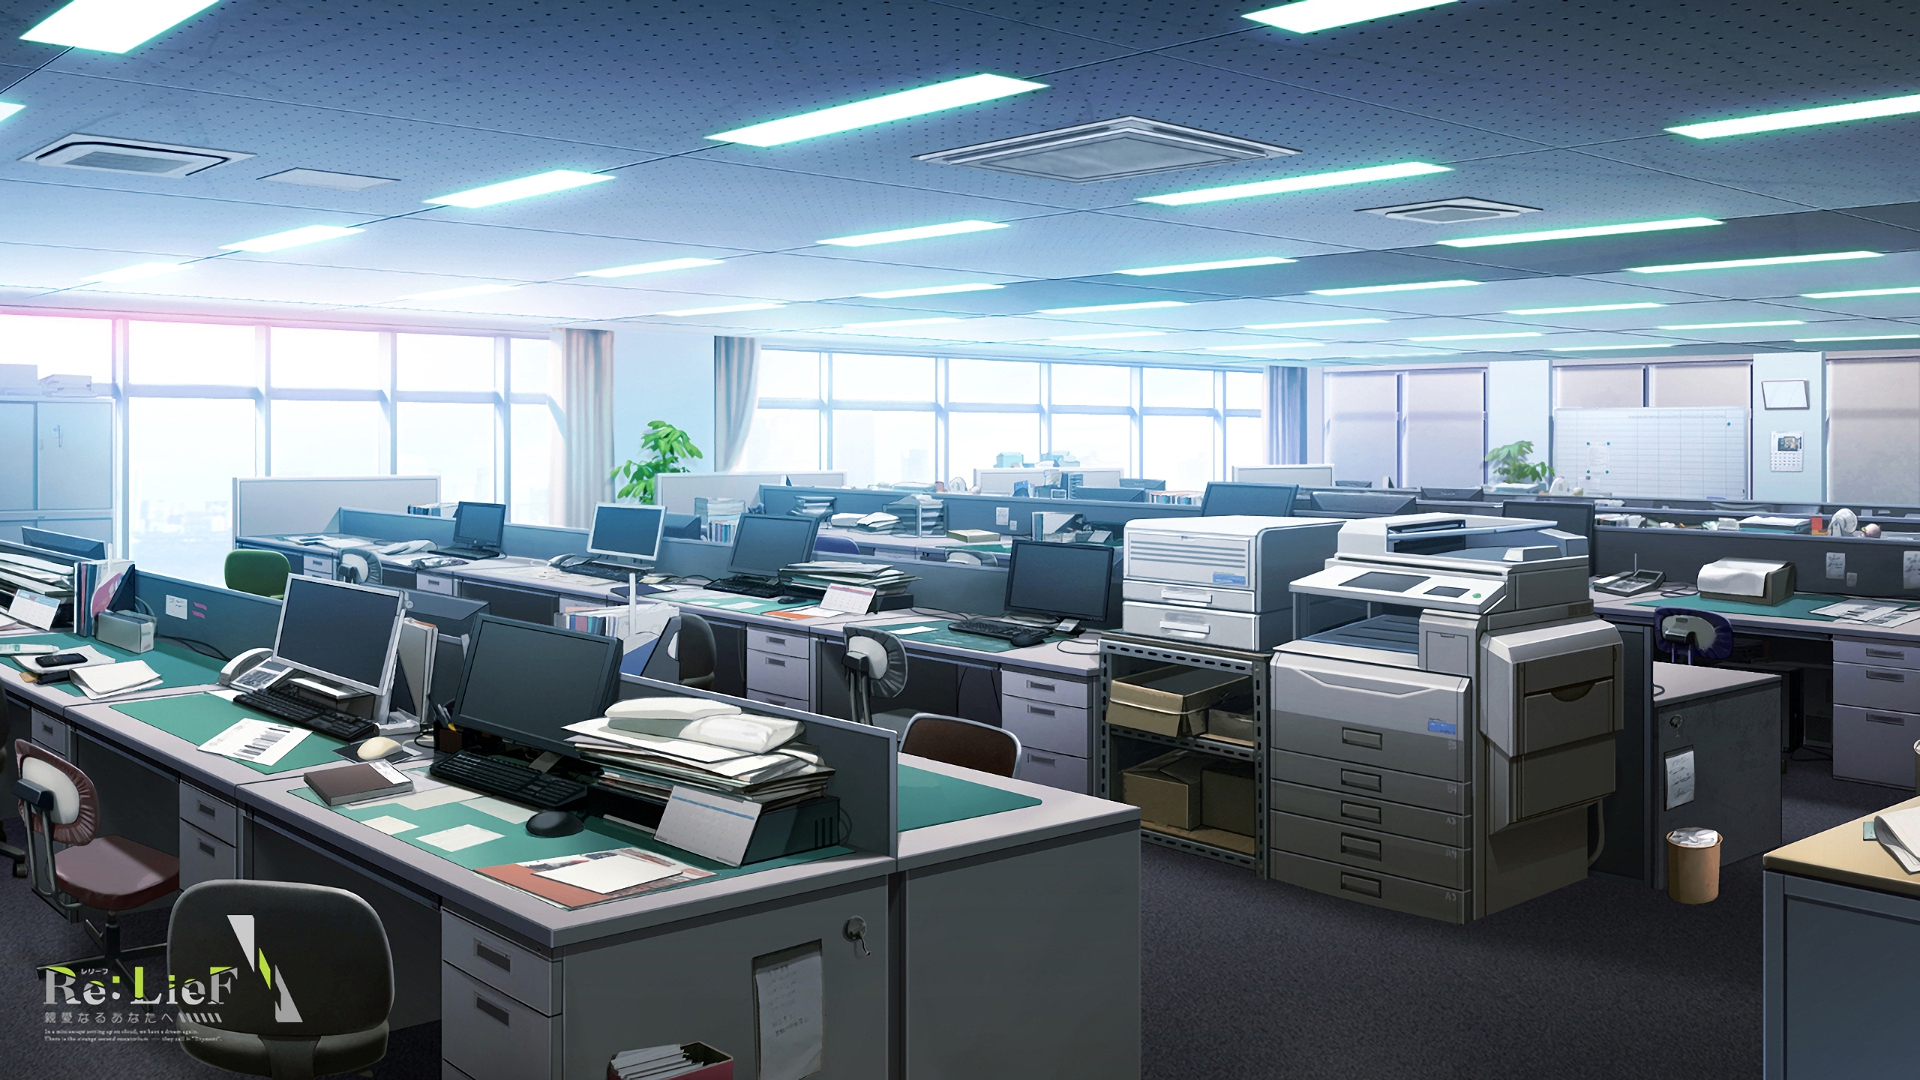 Anime Indoors Office 1920x1080